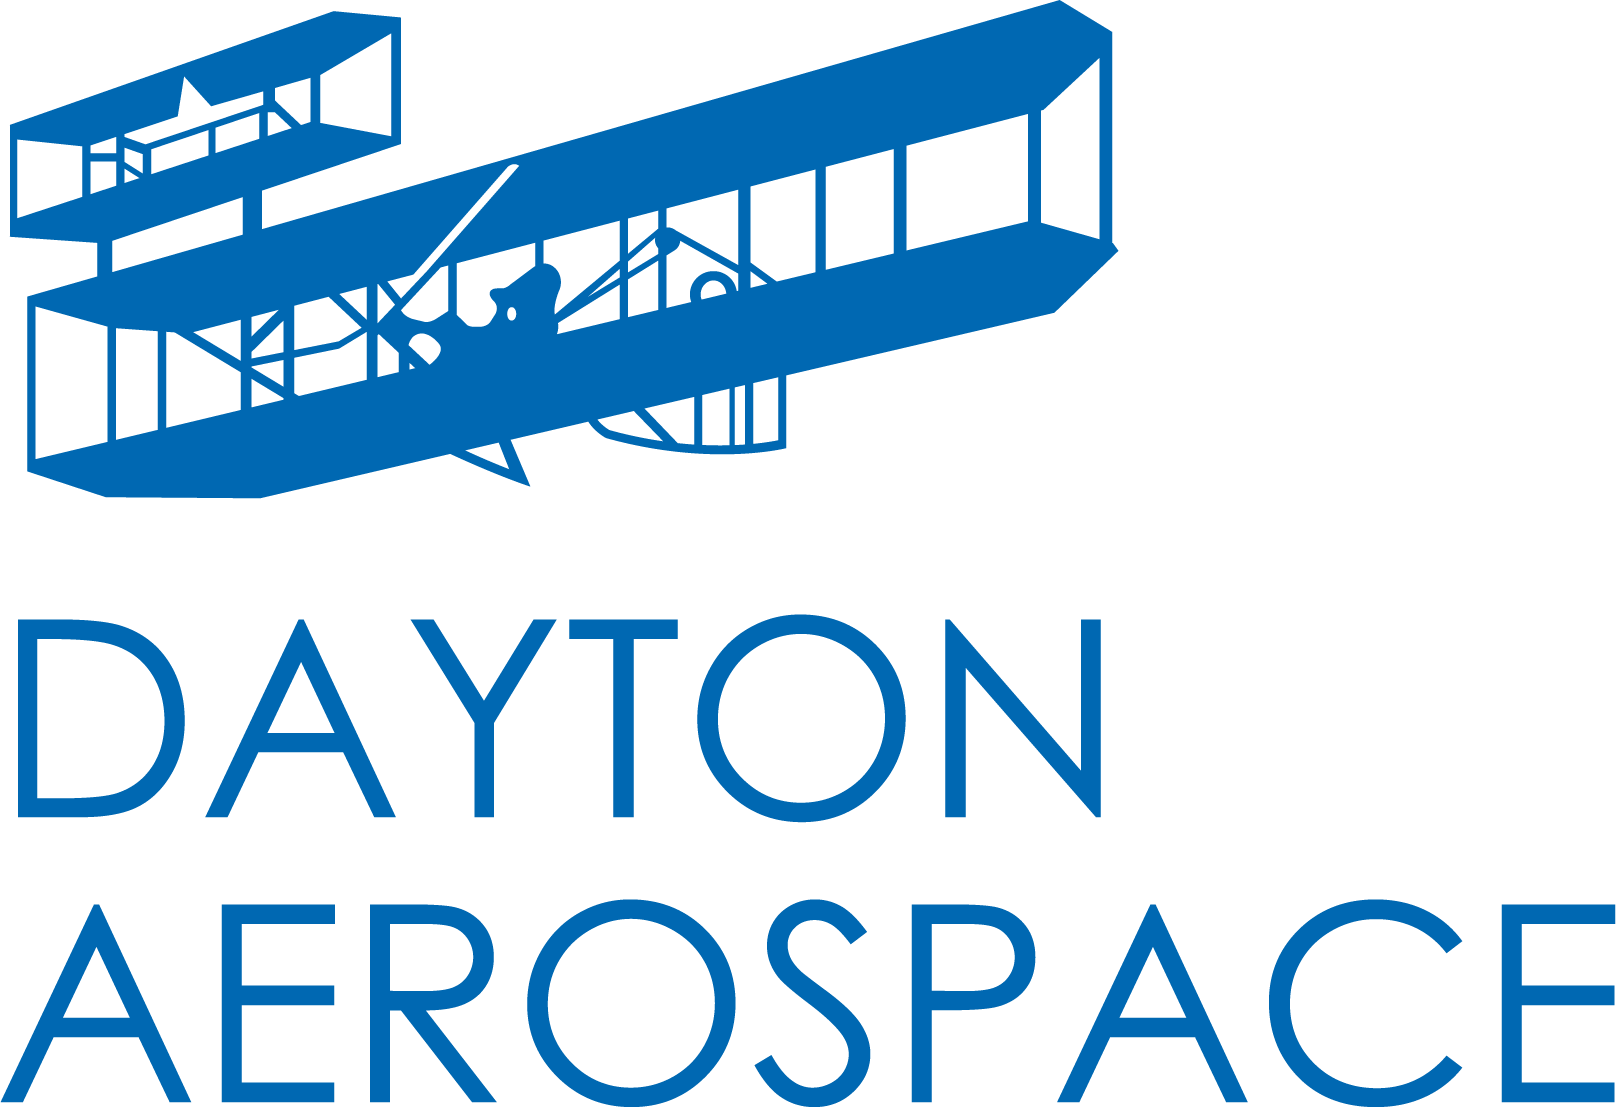 Dayton Aerospace logo in blue featuring a bi-plane